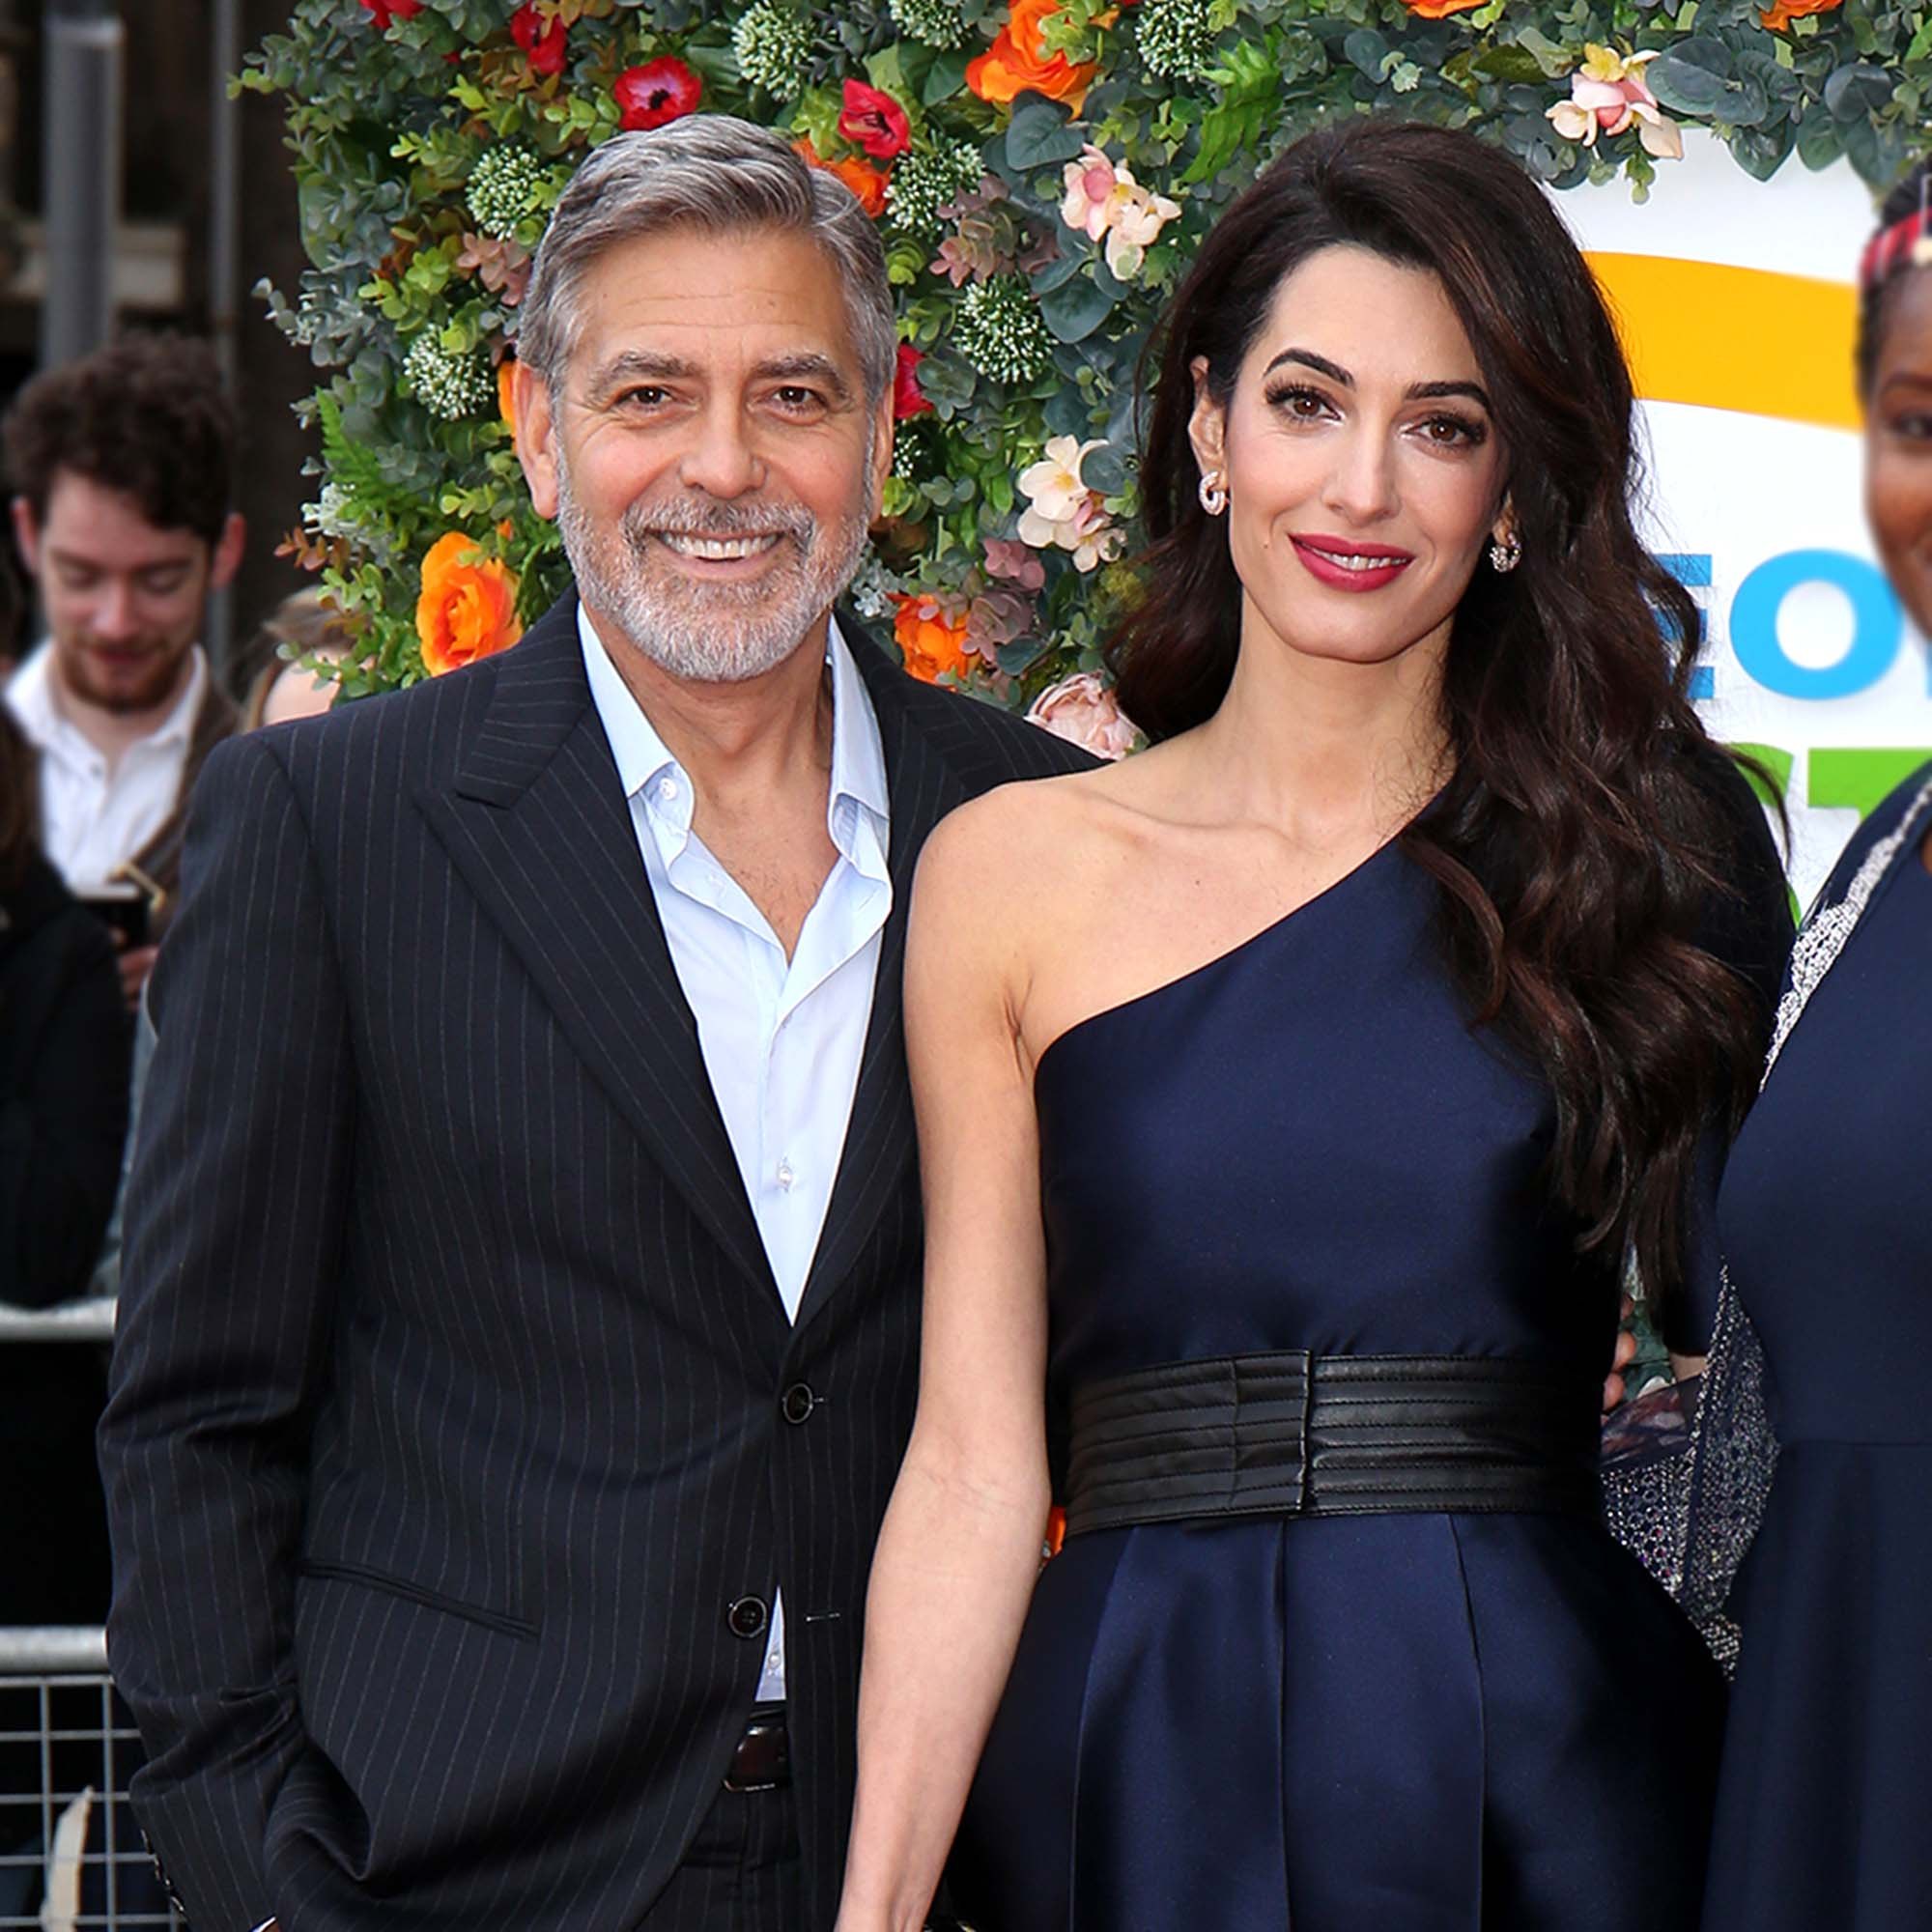 Amal Clooney Worth $50 Billion